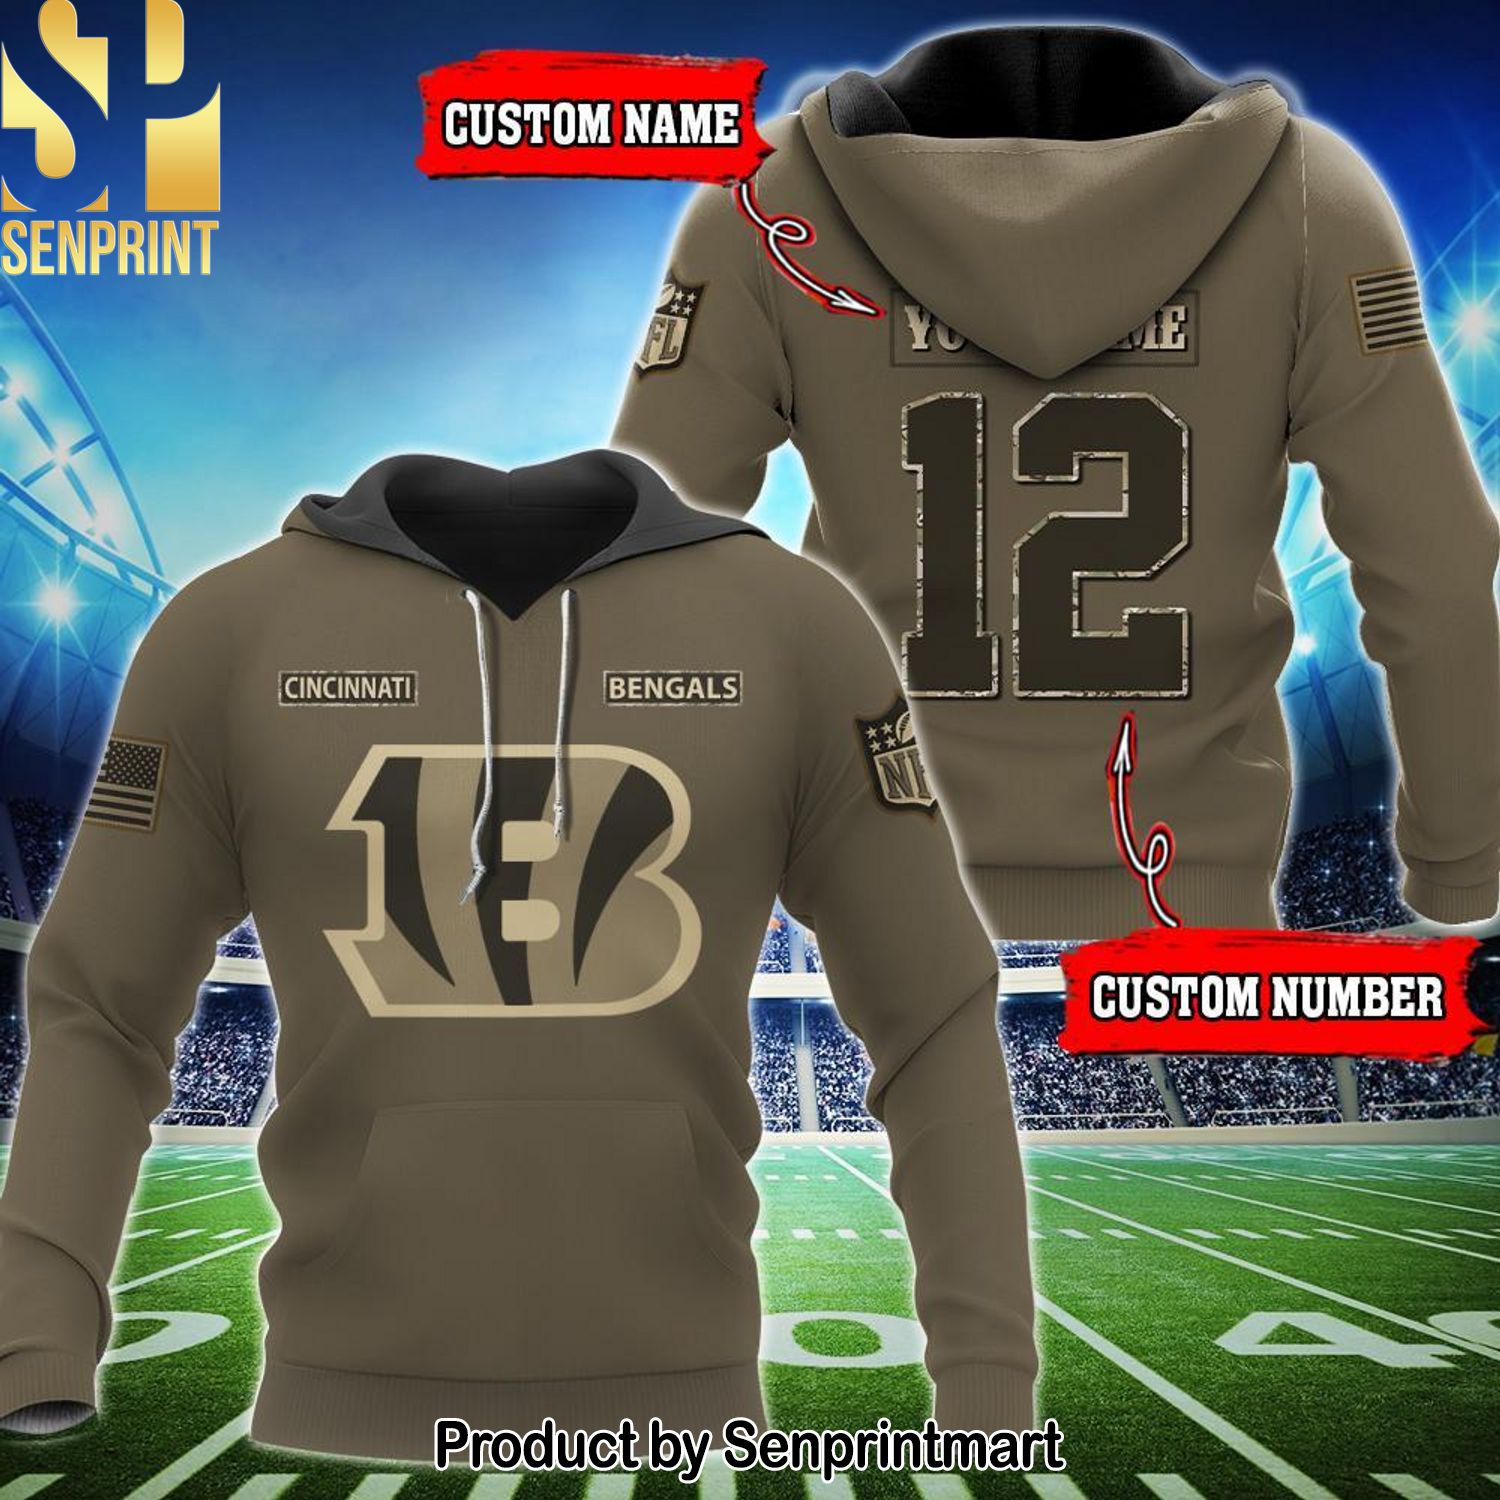 Personalized Your Name And Custom Number NFL Cincinnati Bengals Classic Full Printing Shirt